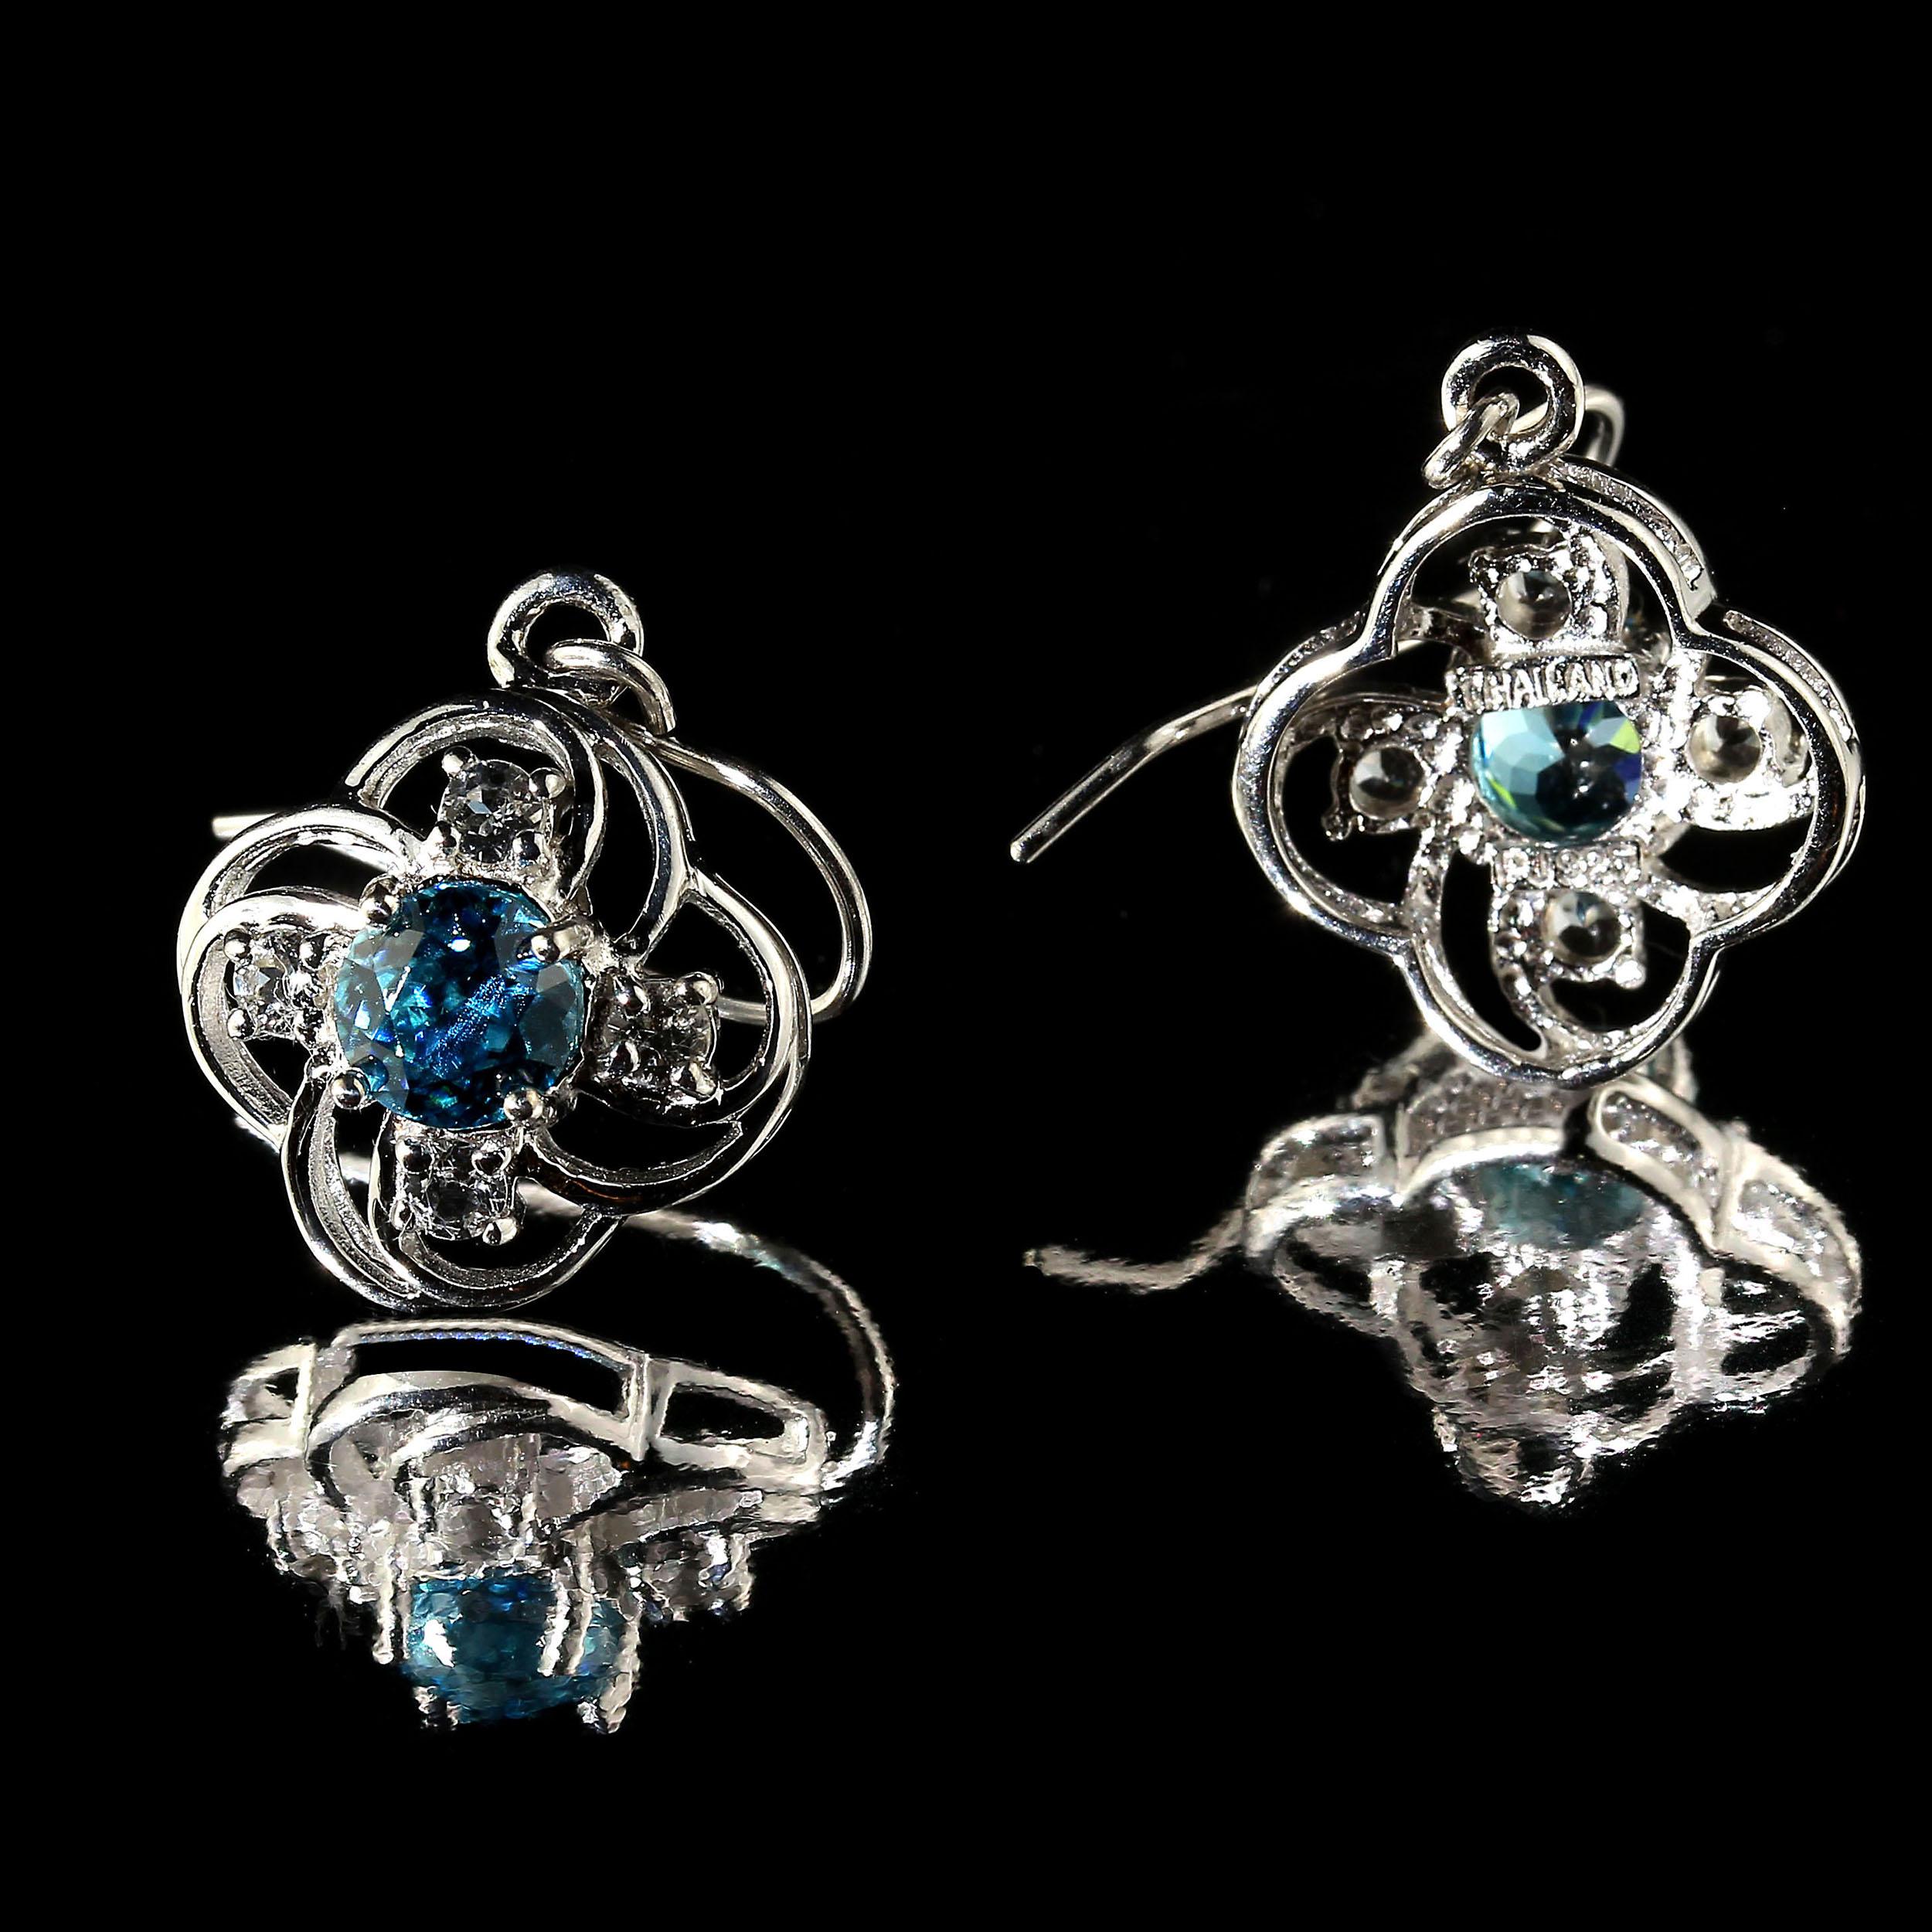 Gemjunky Scintillating Blue Cambodian Zircons in Delicate Silver Earring Baskets 2